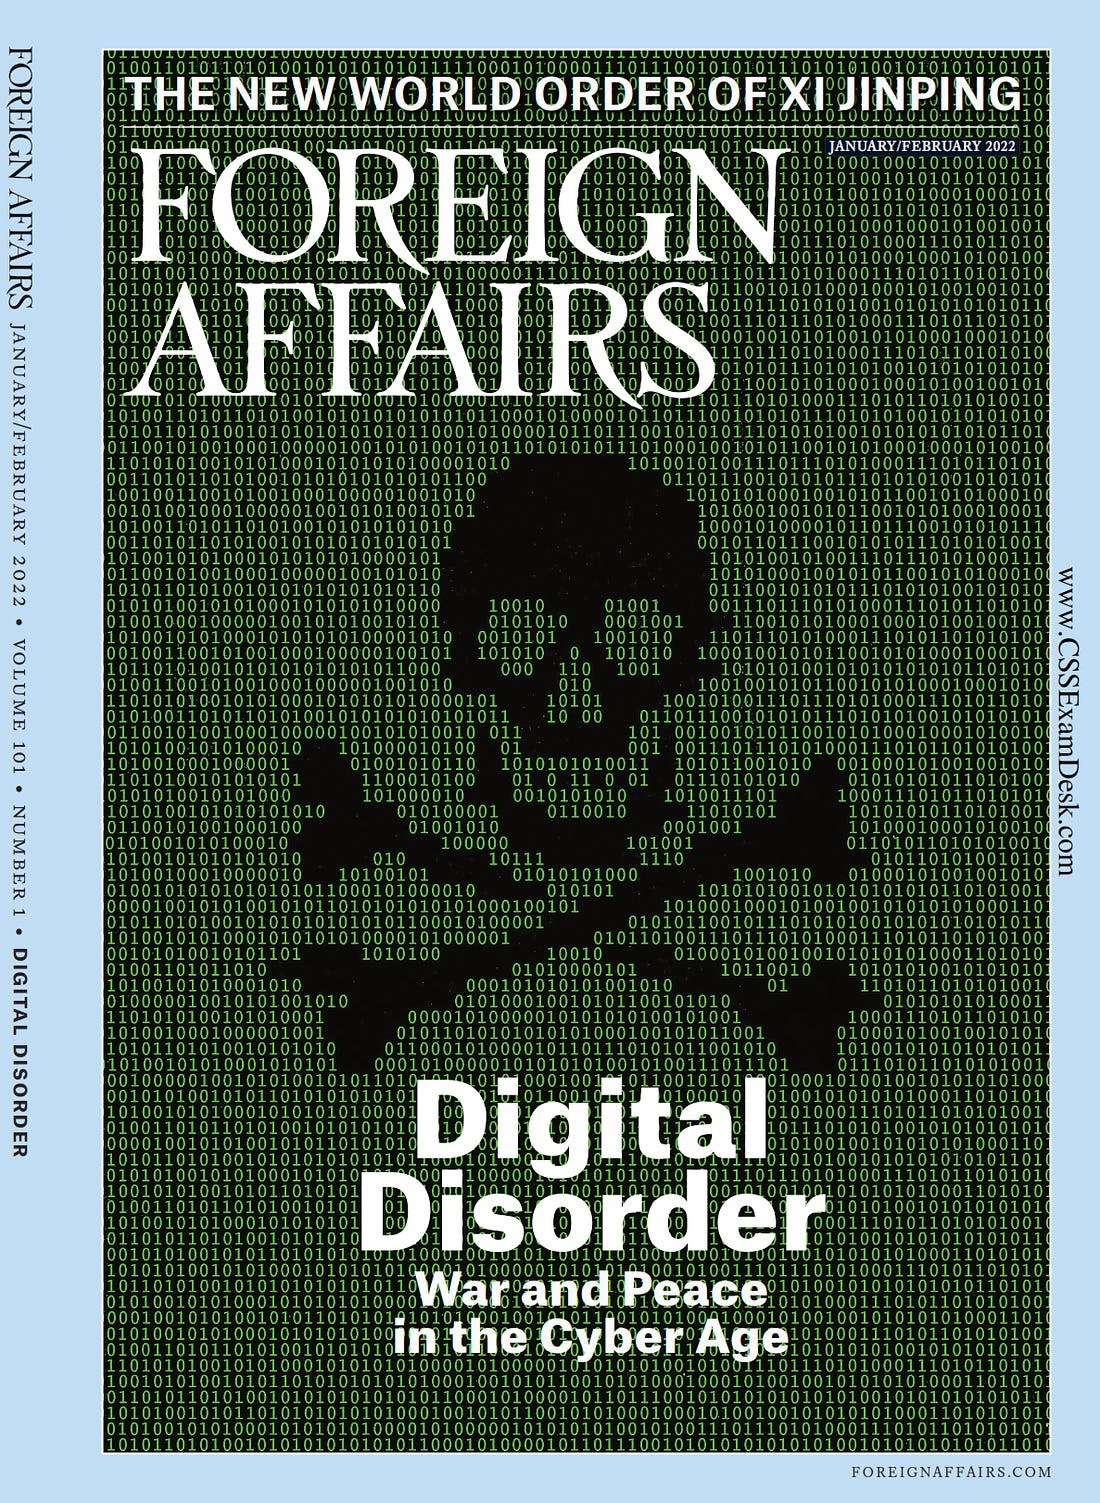 Foreign Affairs Magazine (January & February 2022)